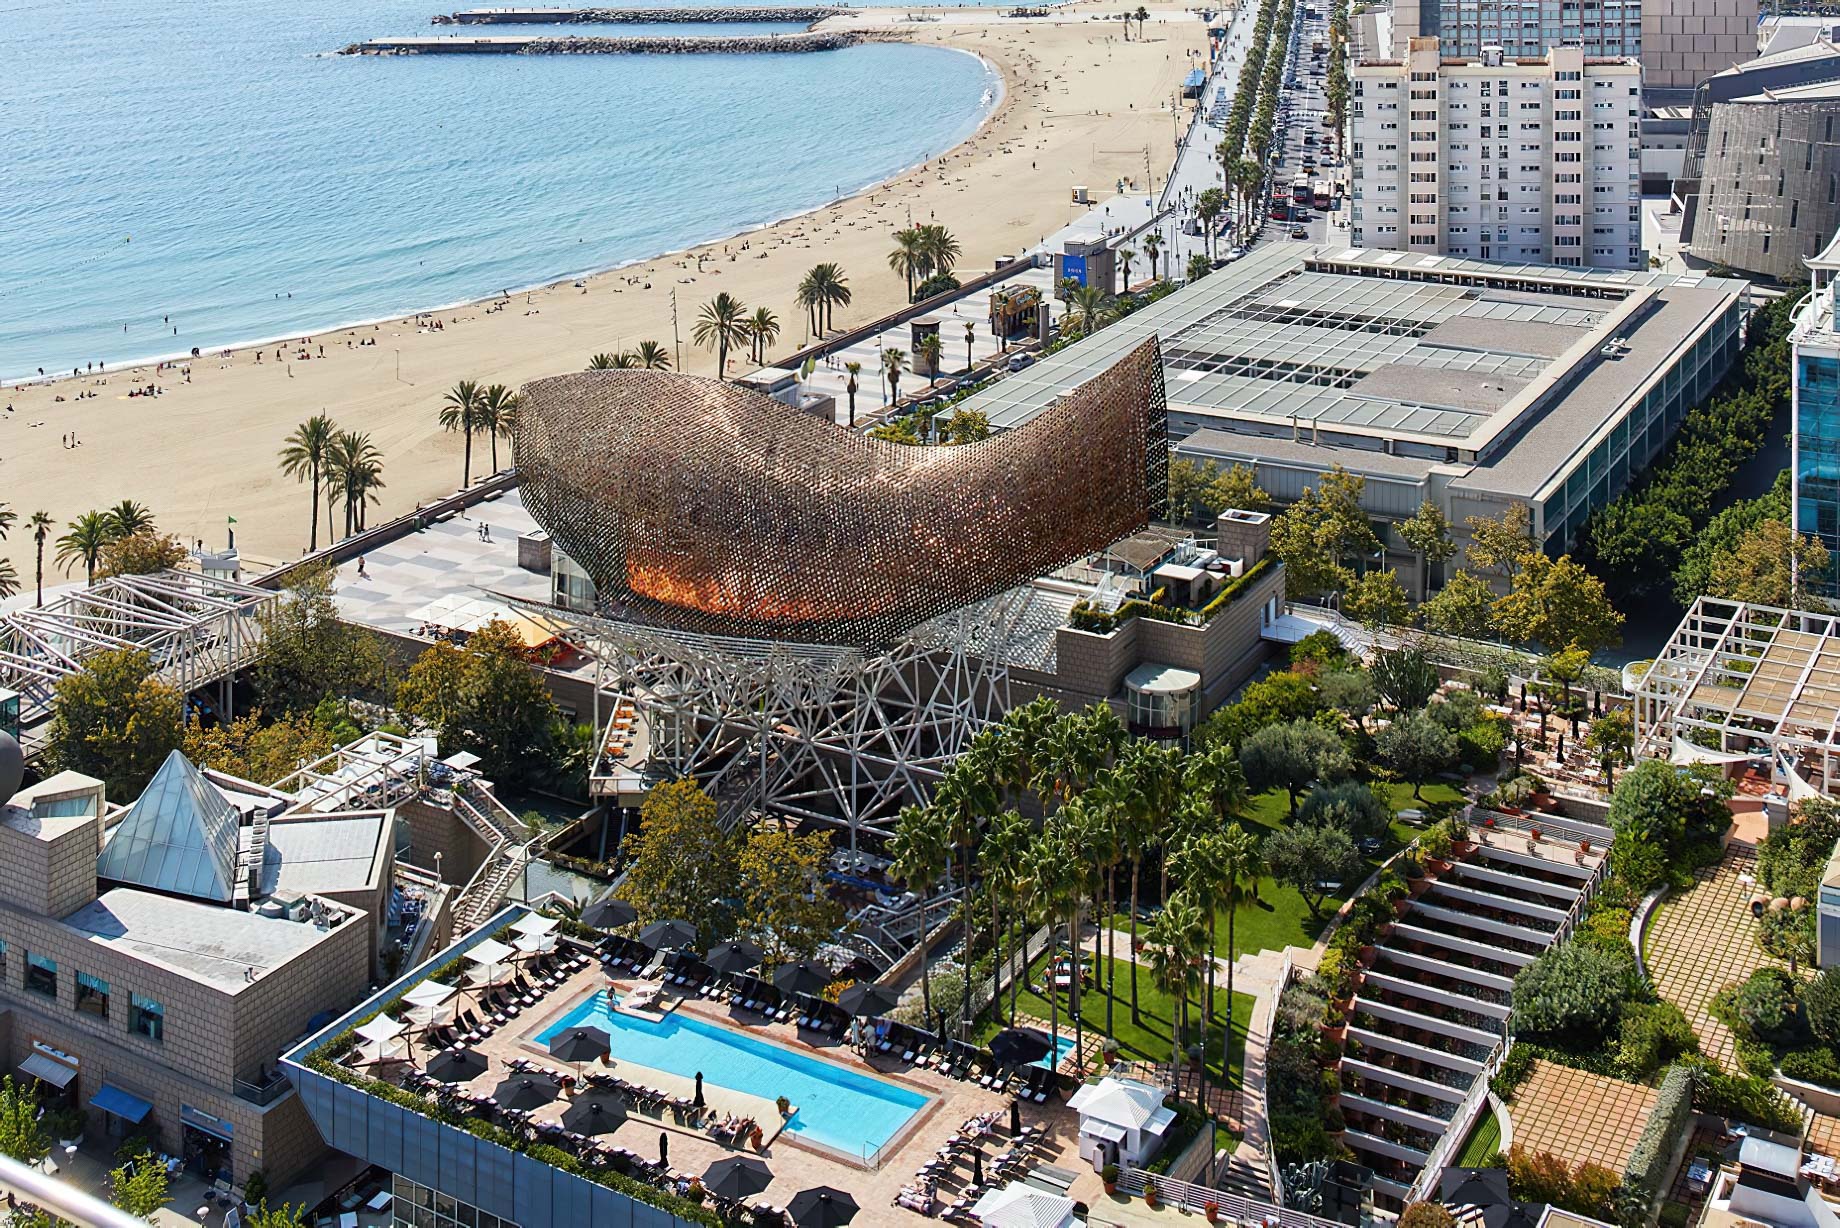 Hotel Arts Barcelona Ritz-Carlton – Barcelona, Spain – Exterior Aerial Pool View